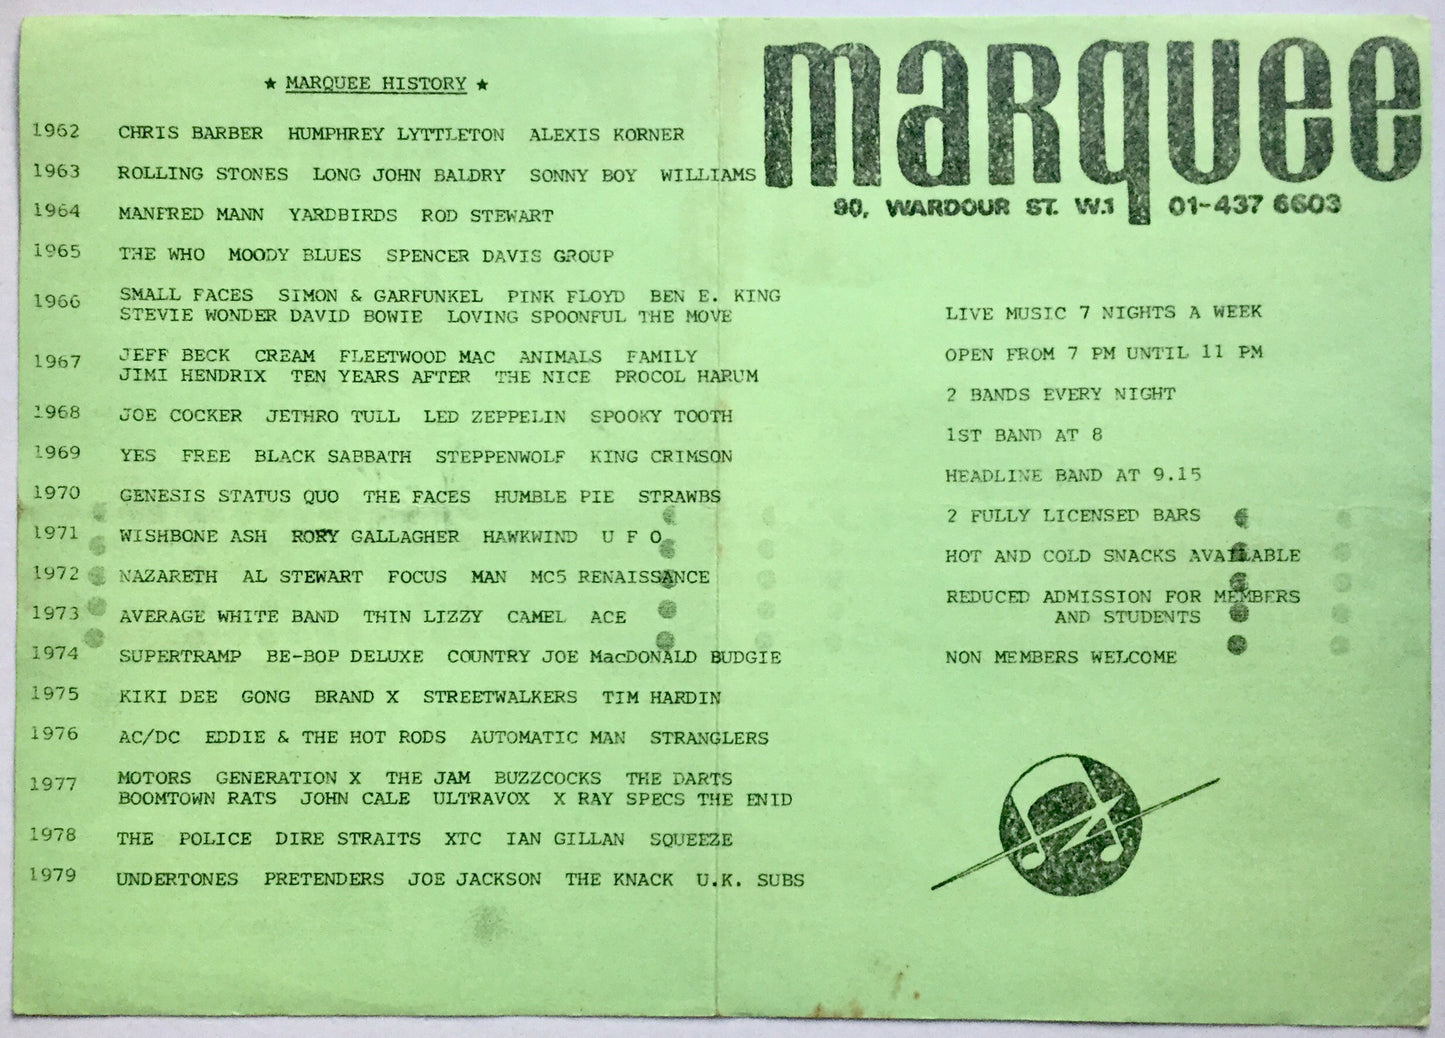 Slade Q Tips Girlschool Original Concert Handbill Flyer Marquee Club London June 1980